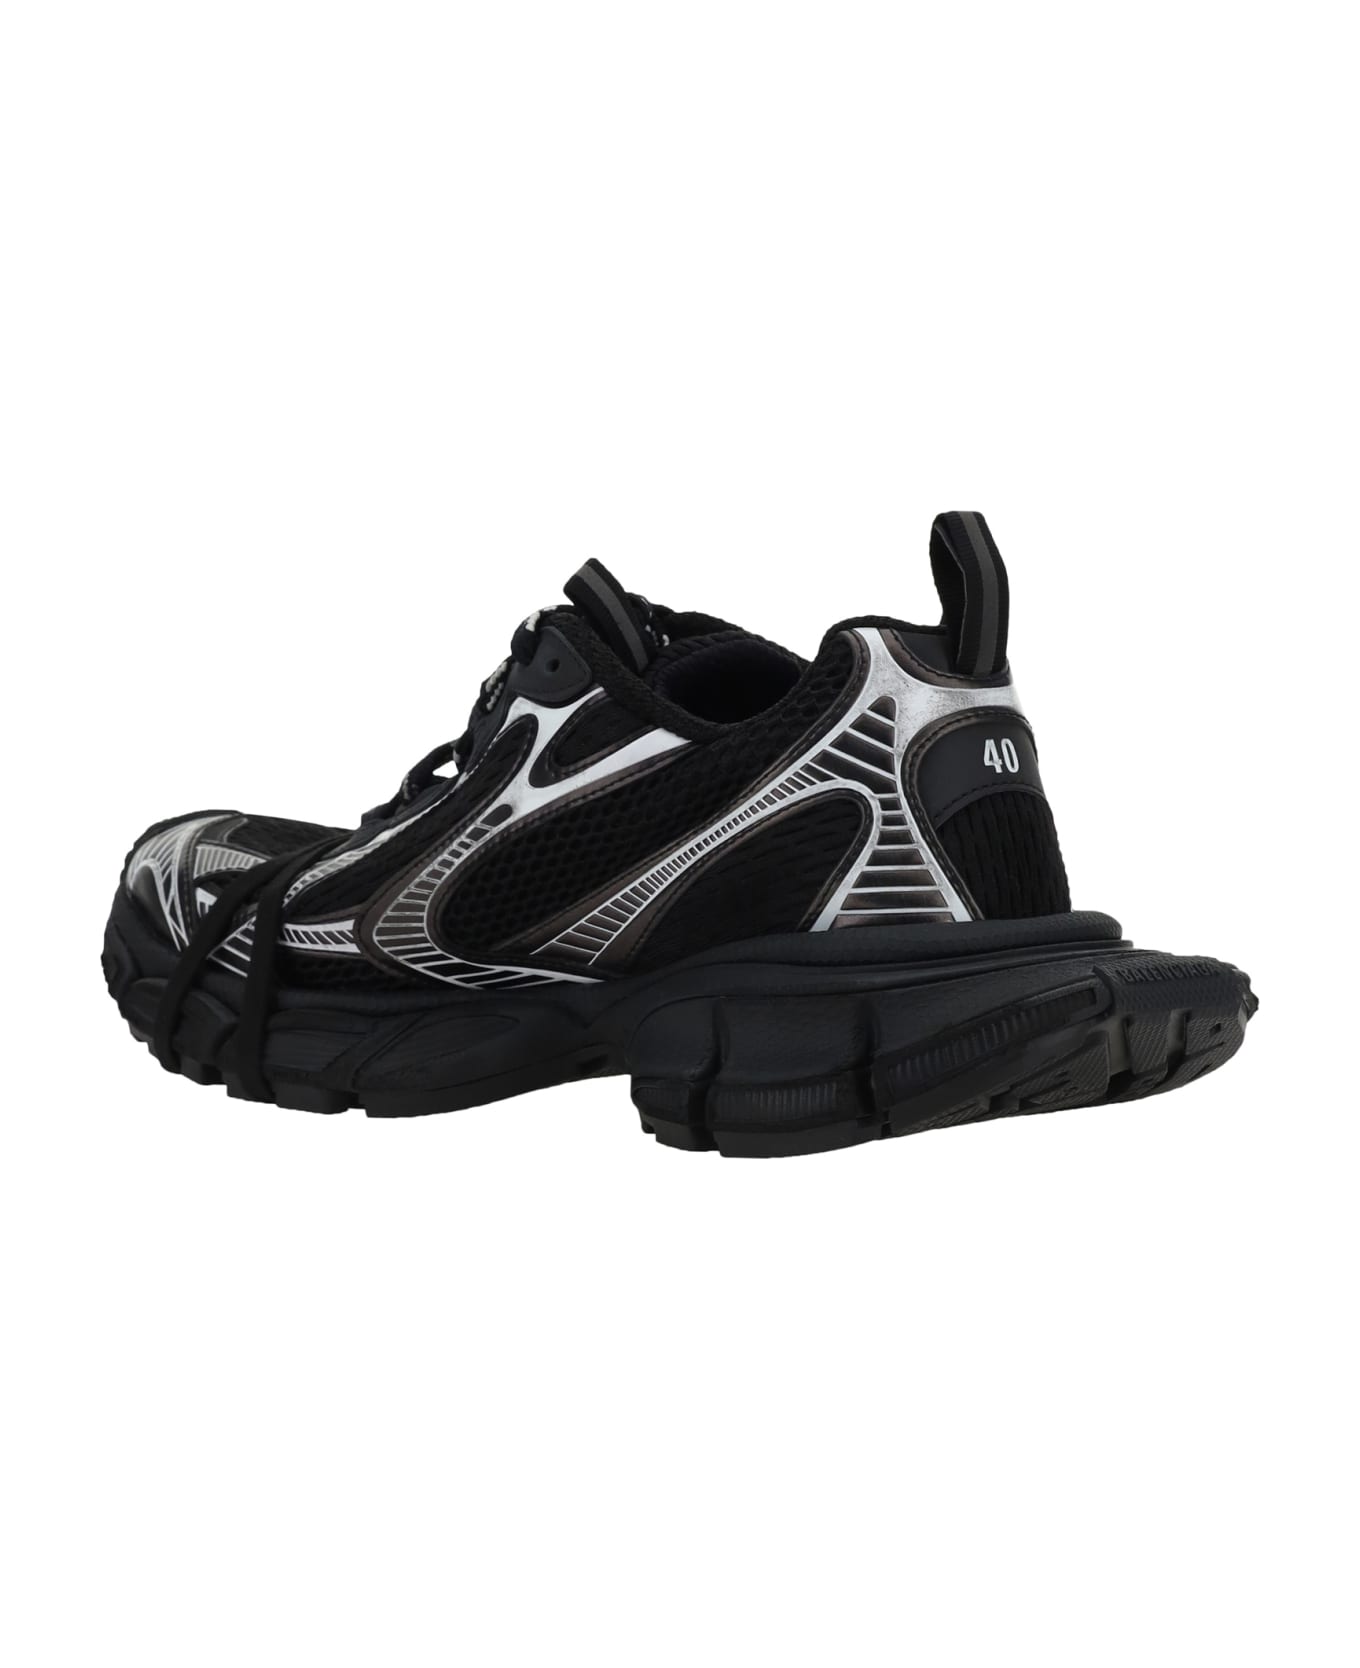 Balenciaga Sneakers - Black/white スニーカー